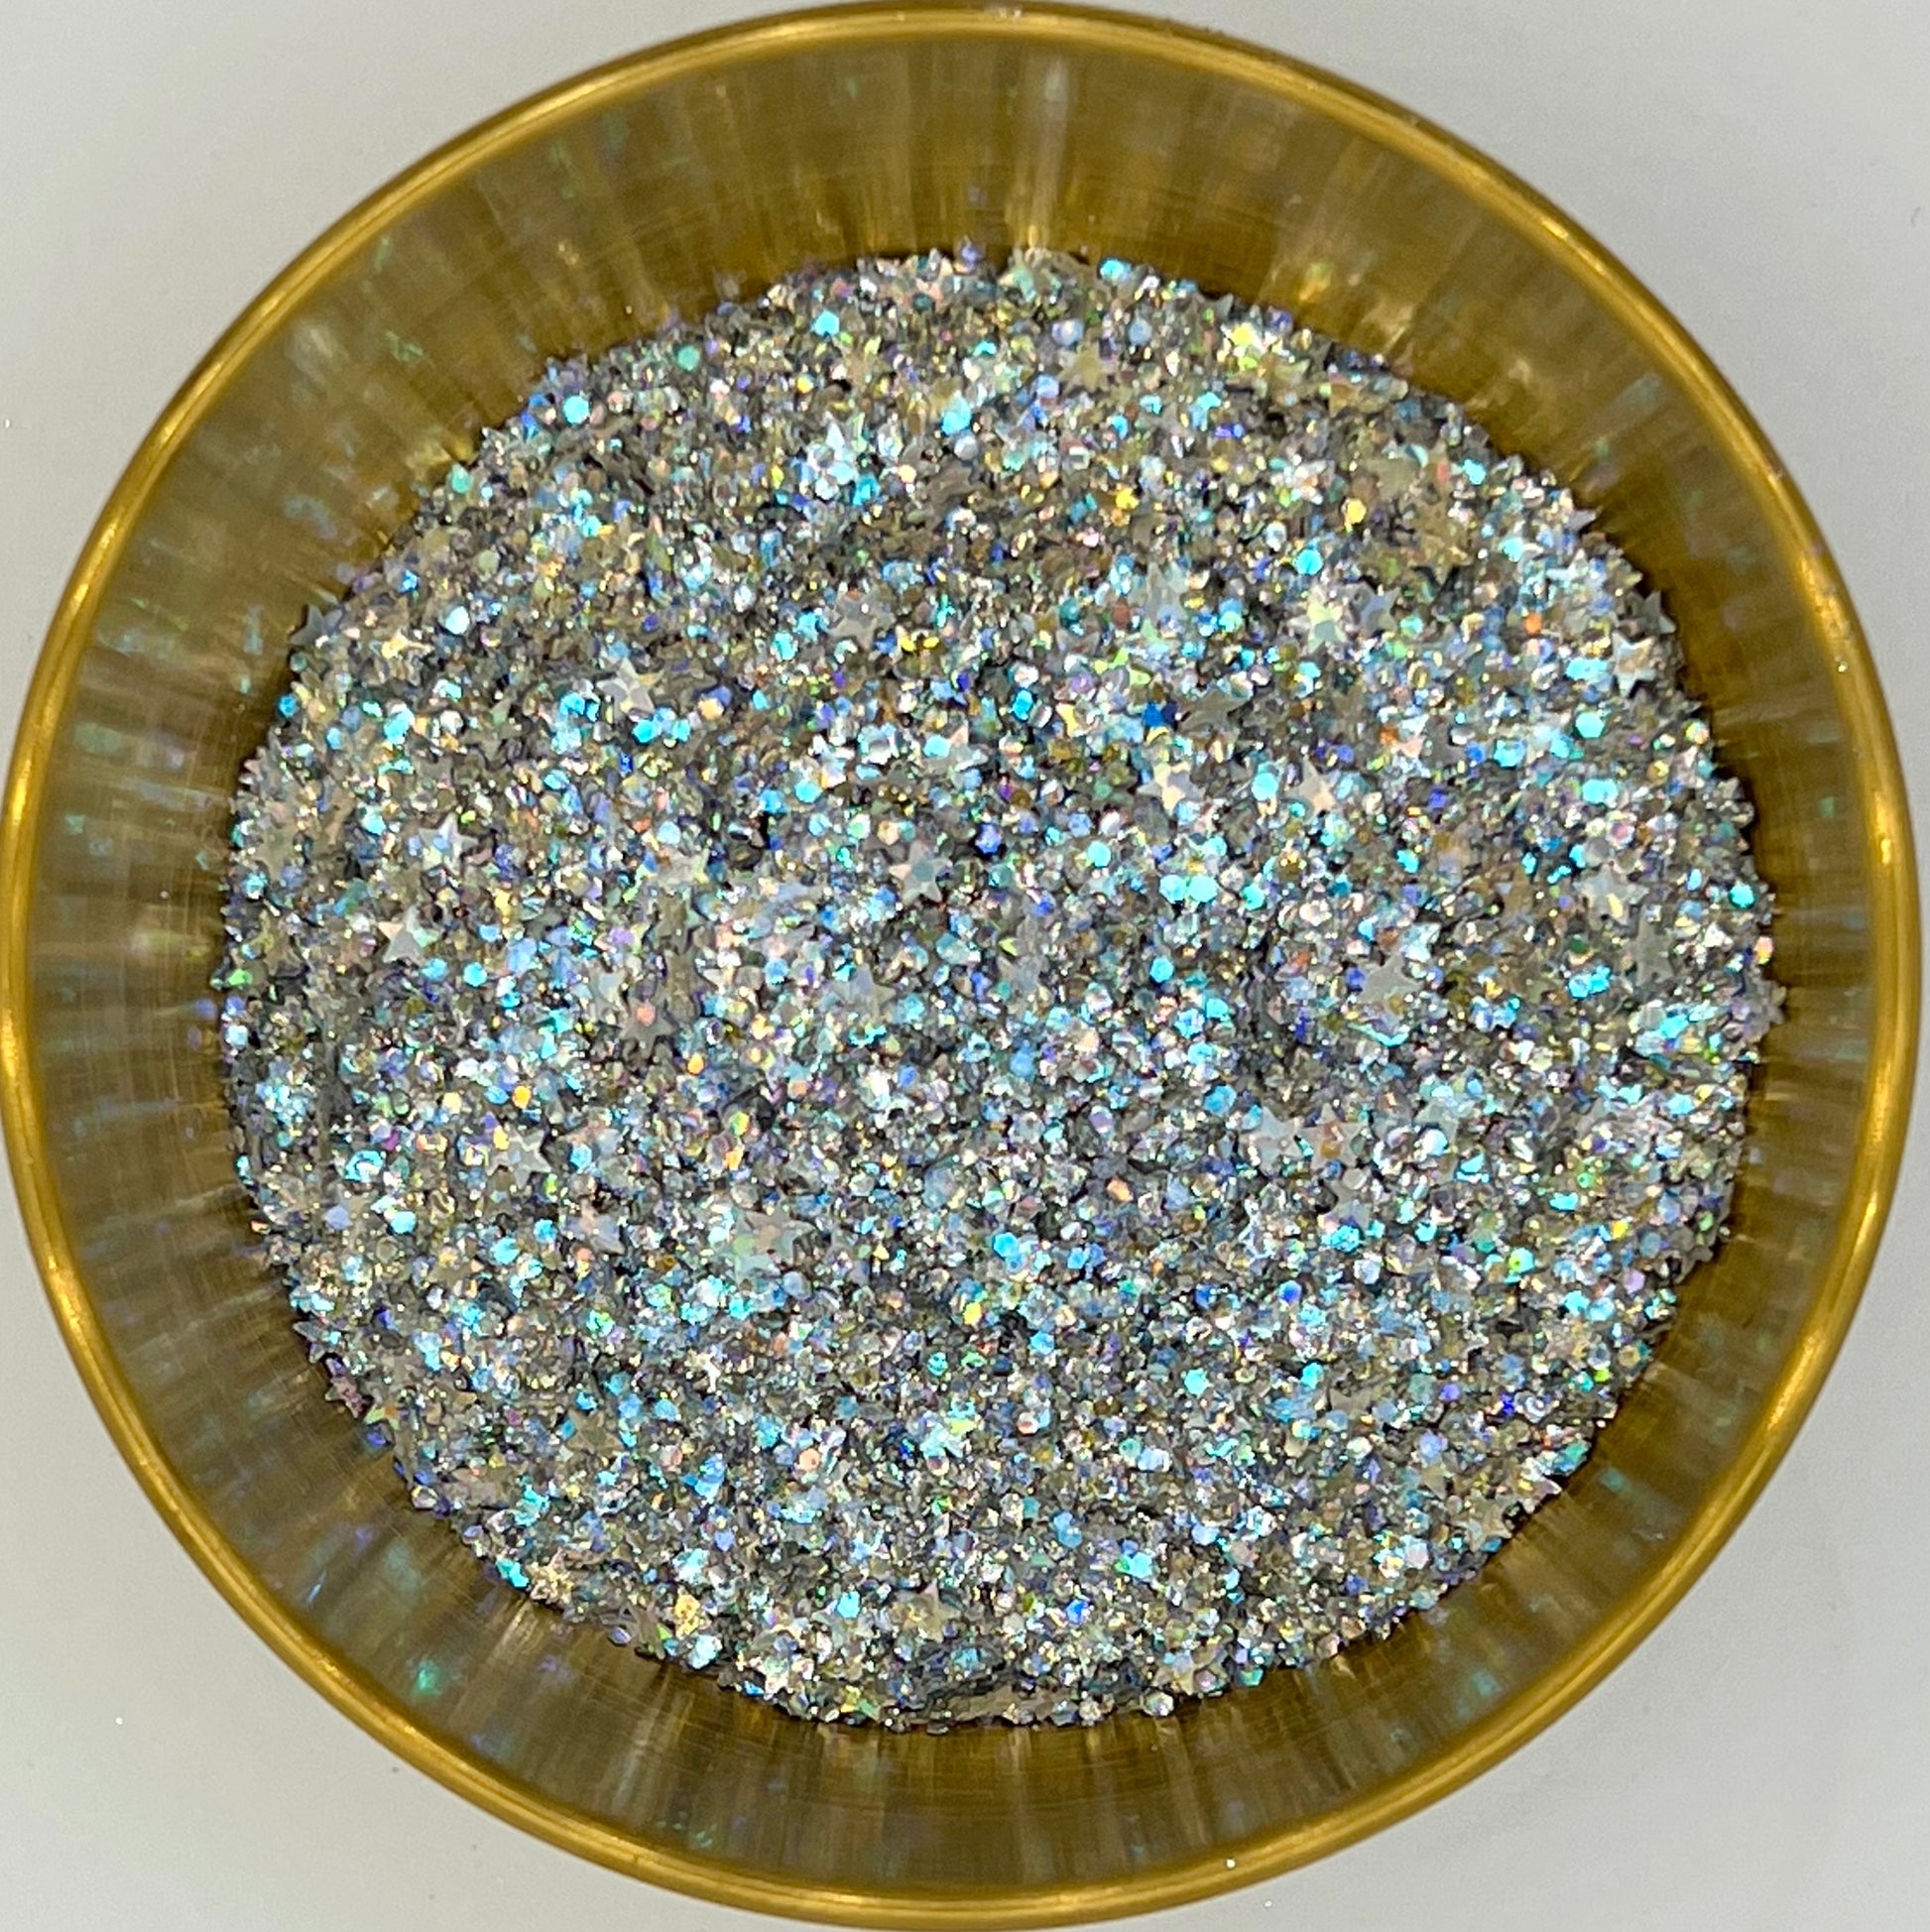 Radio Stars Holographic Biodegradable Glitter Mix